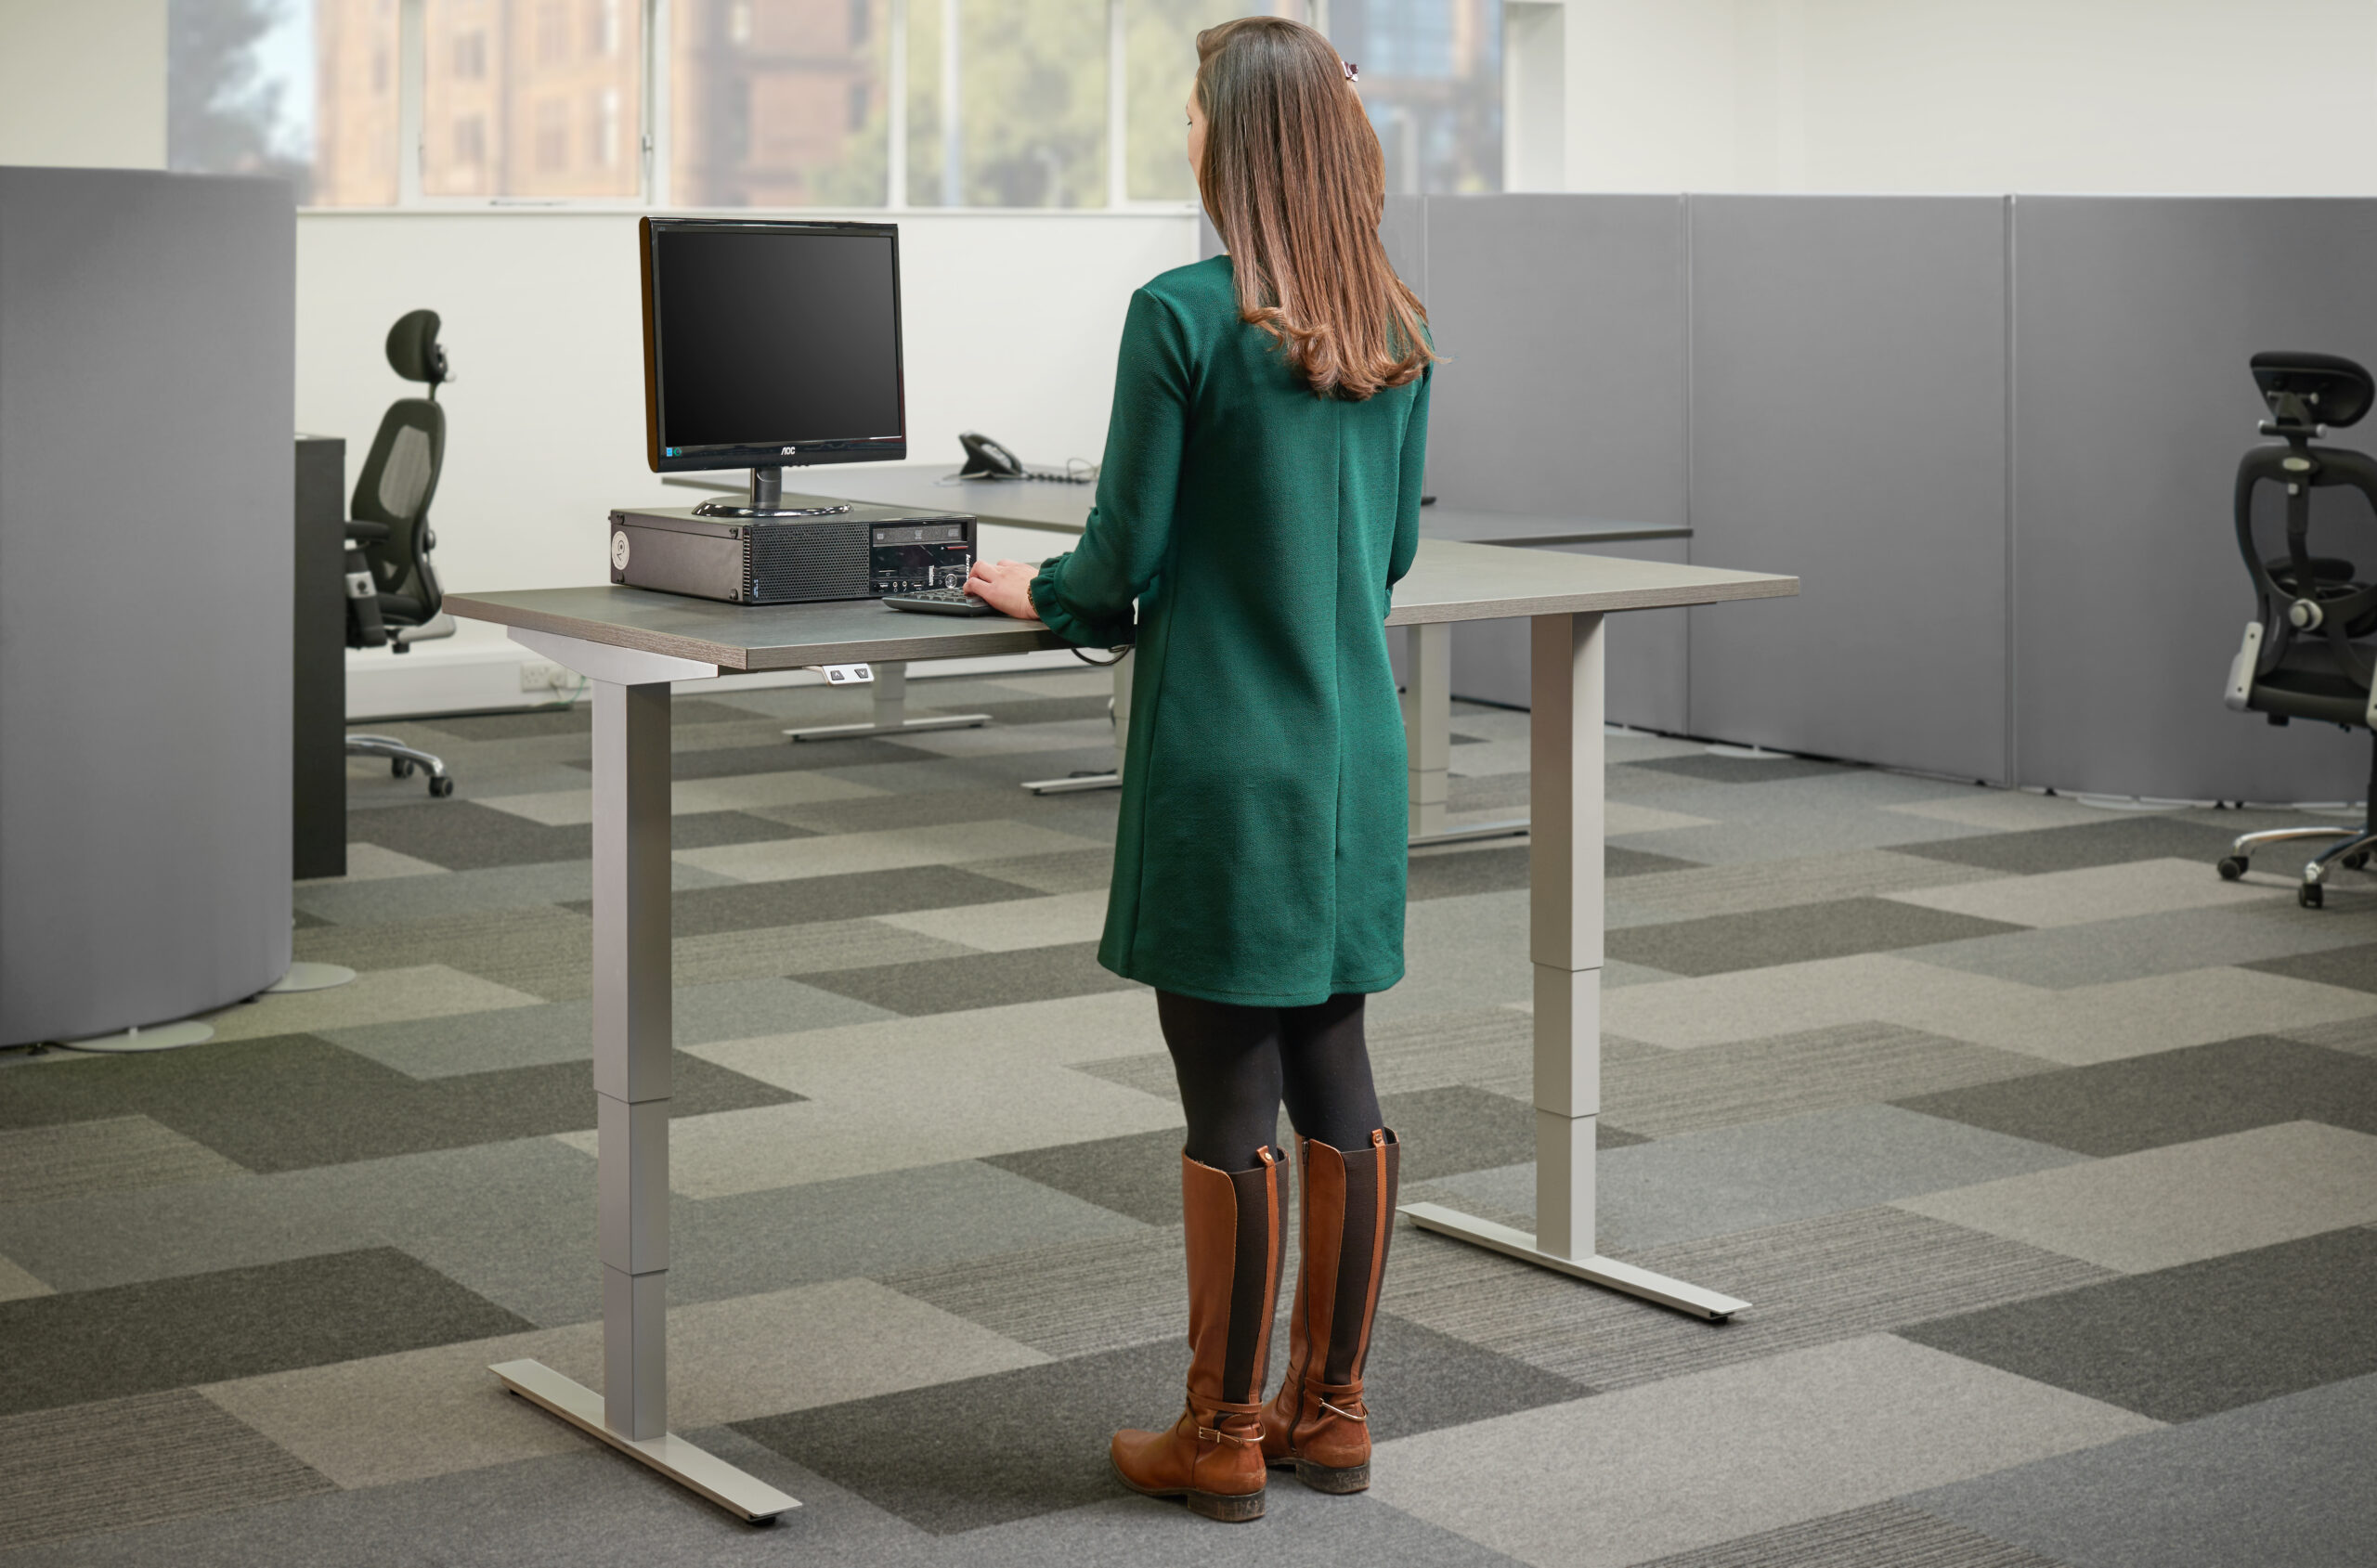 Height-Adjustable Desks For Sciatica - Blog post by Lavoro Design